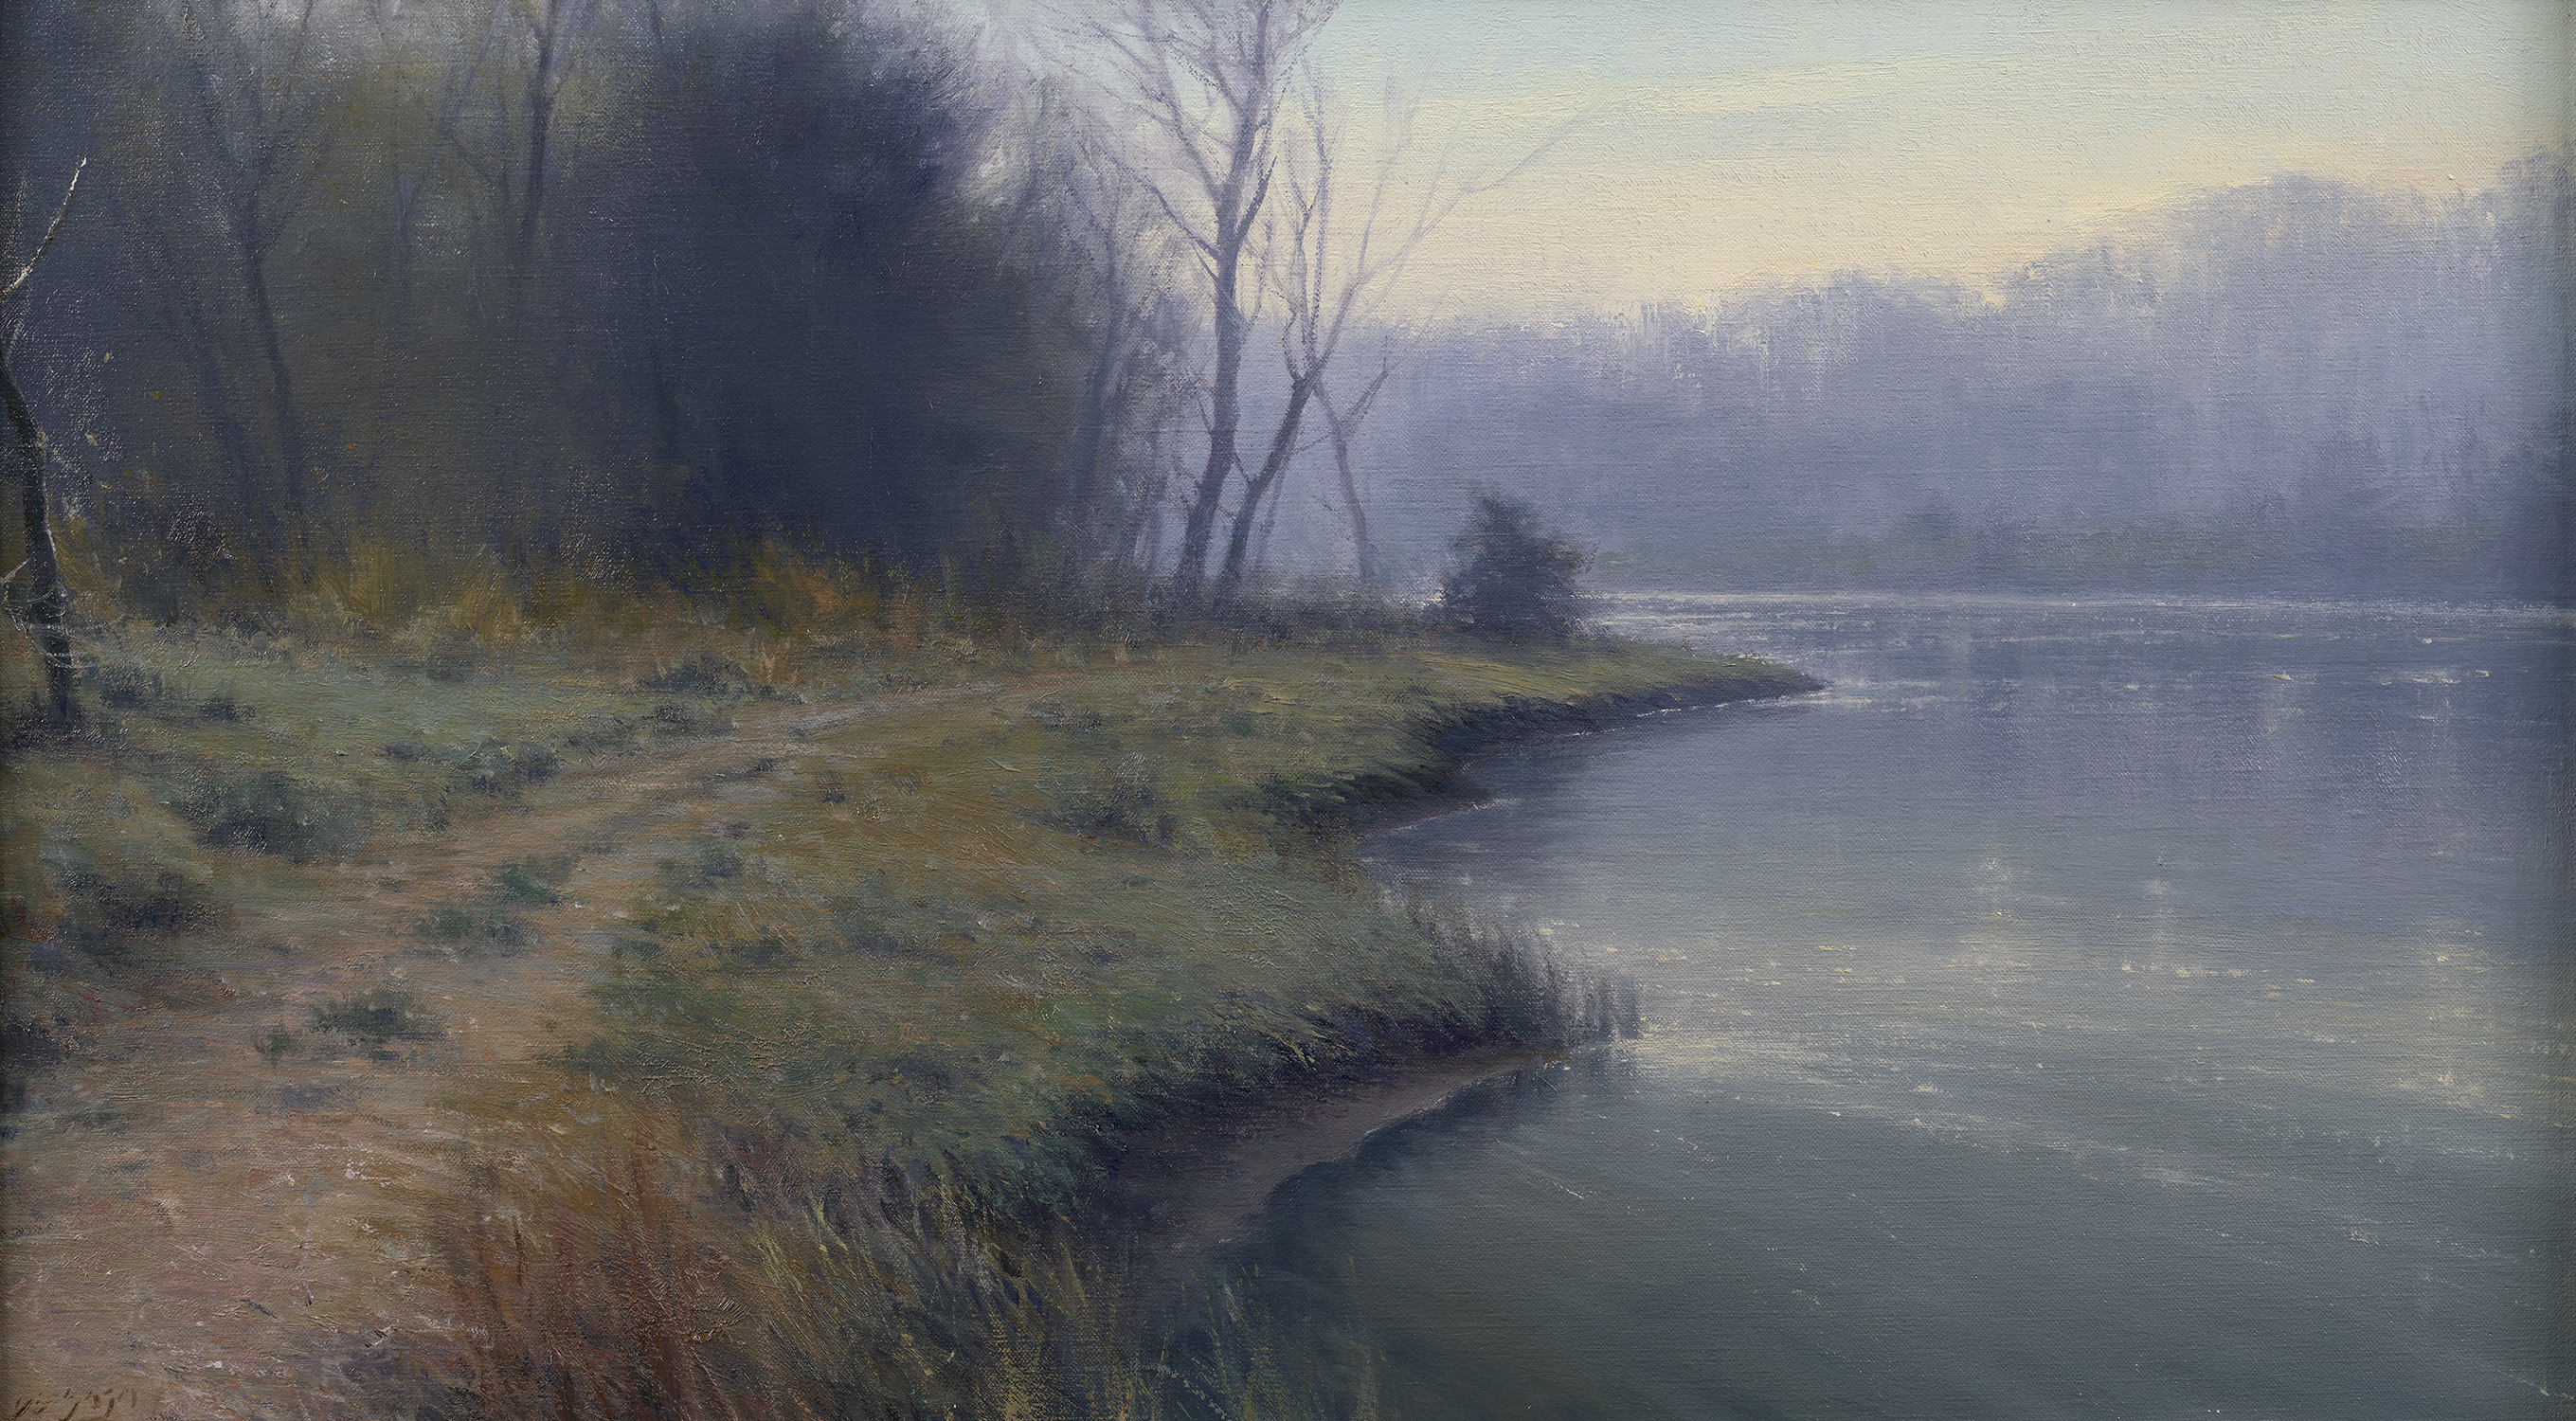 Morning on the River - Basa, D. Eleinne